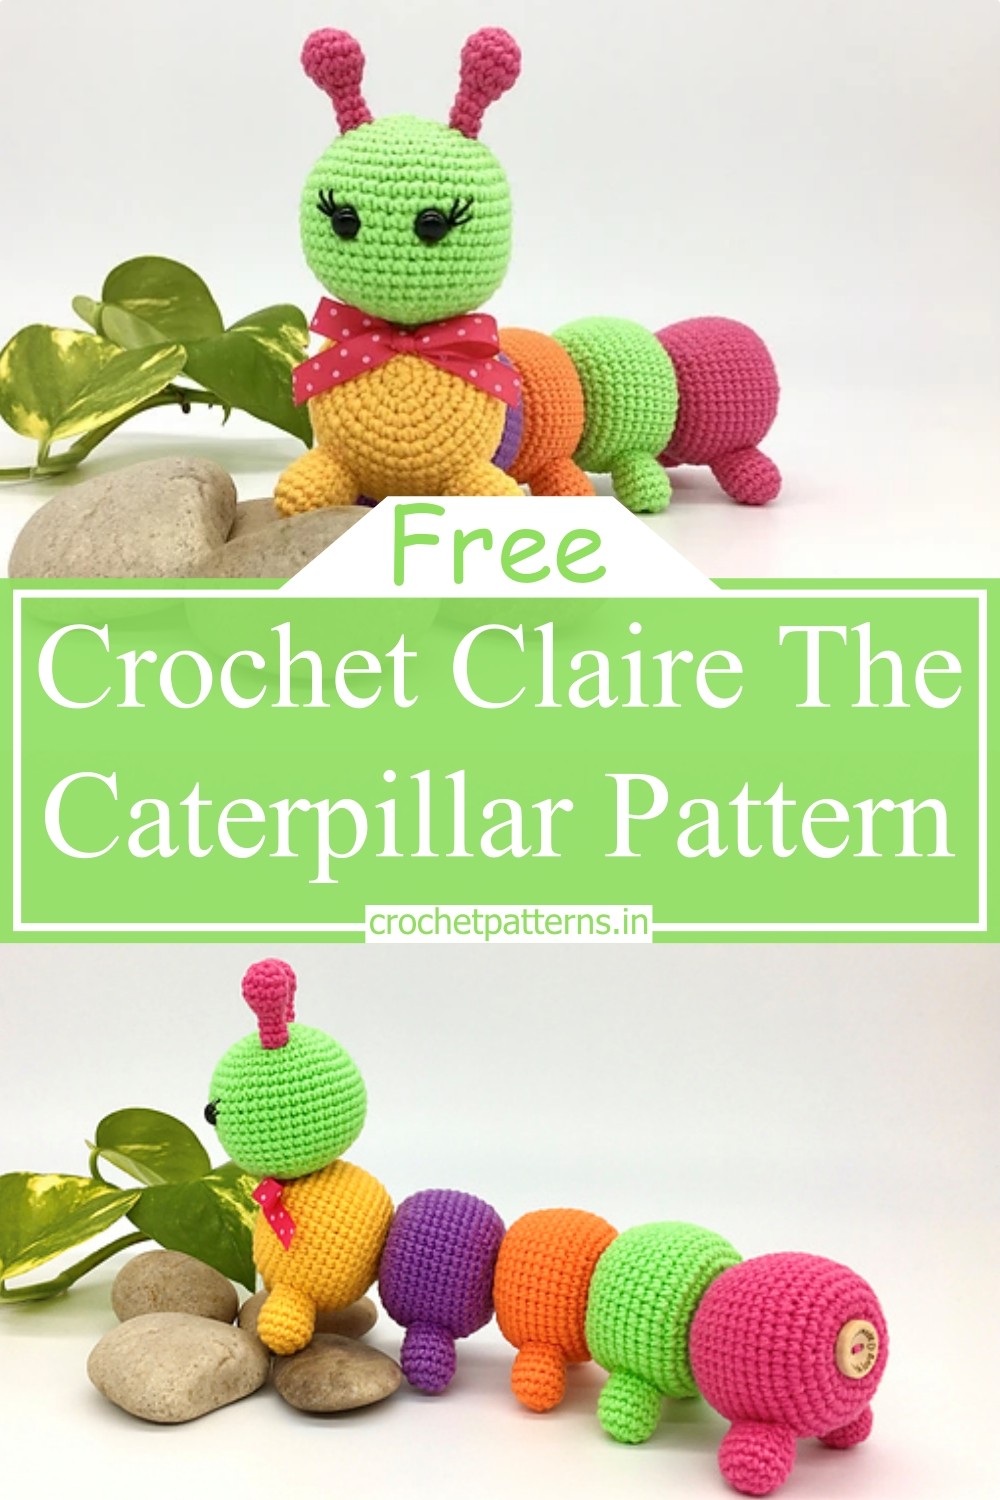 Crochet Claire The Caterpillar Pattern